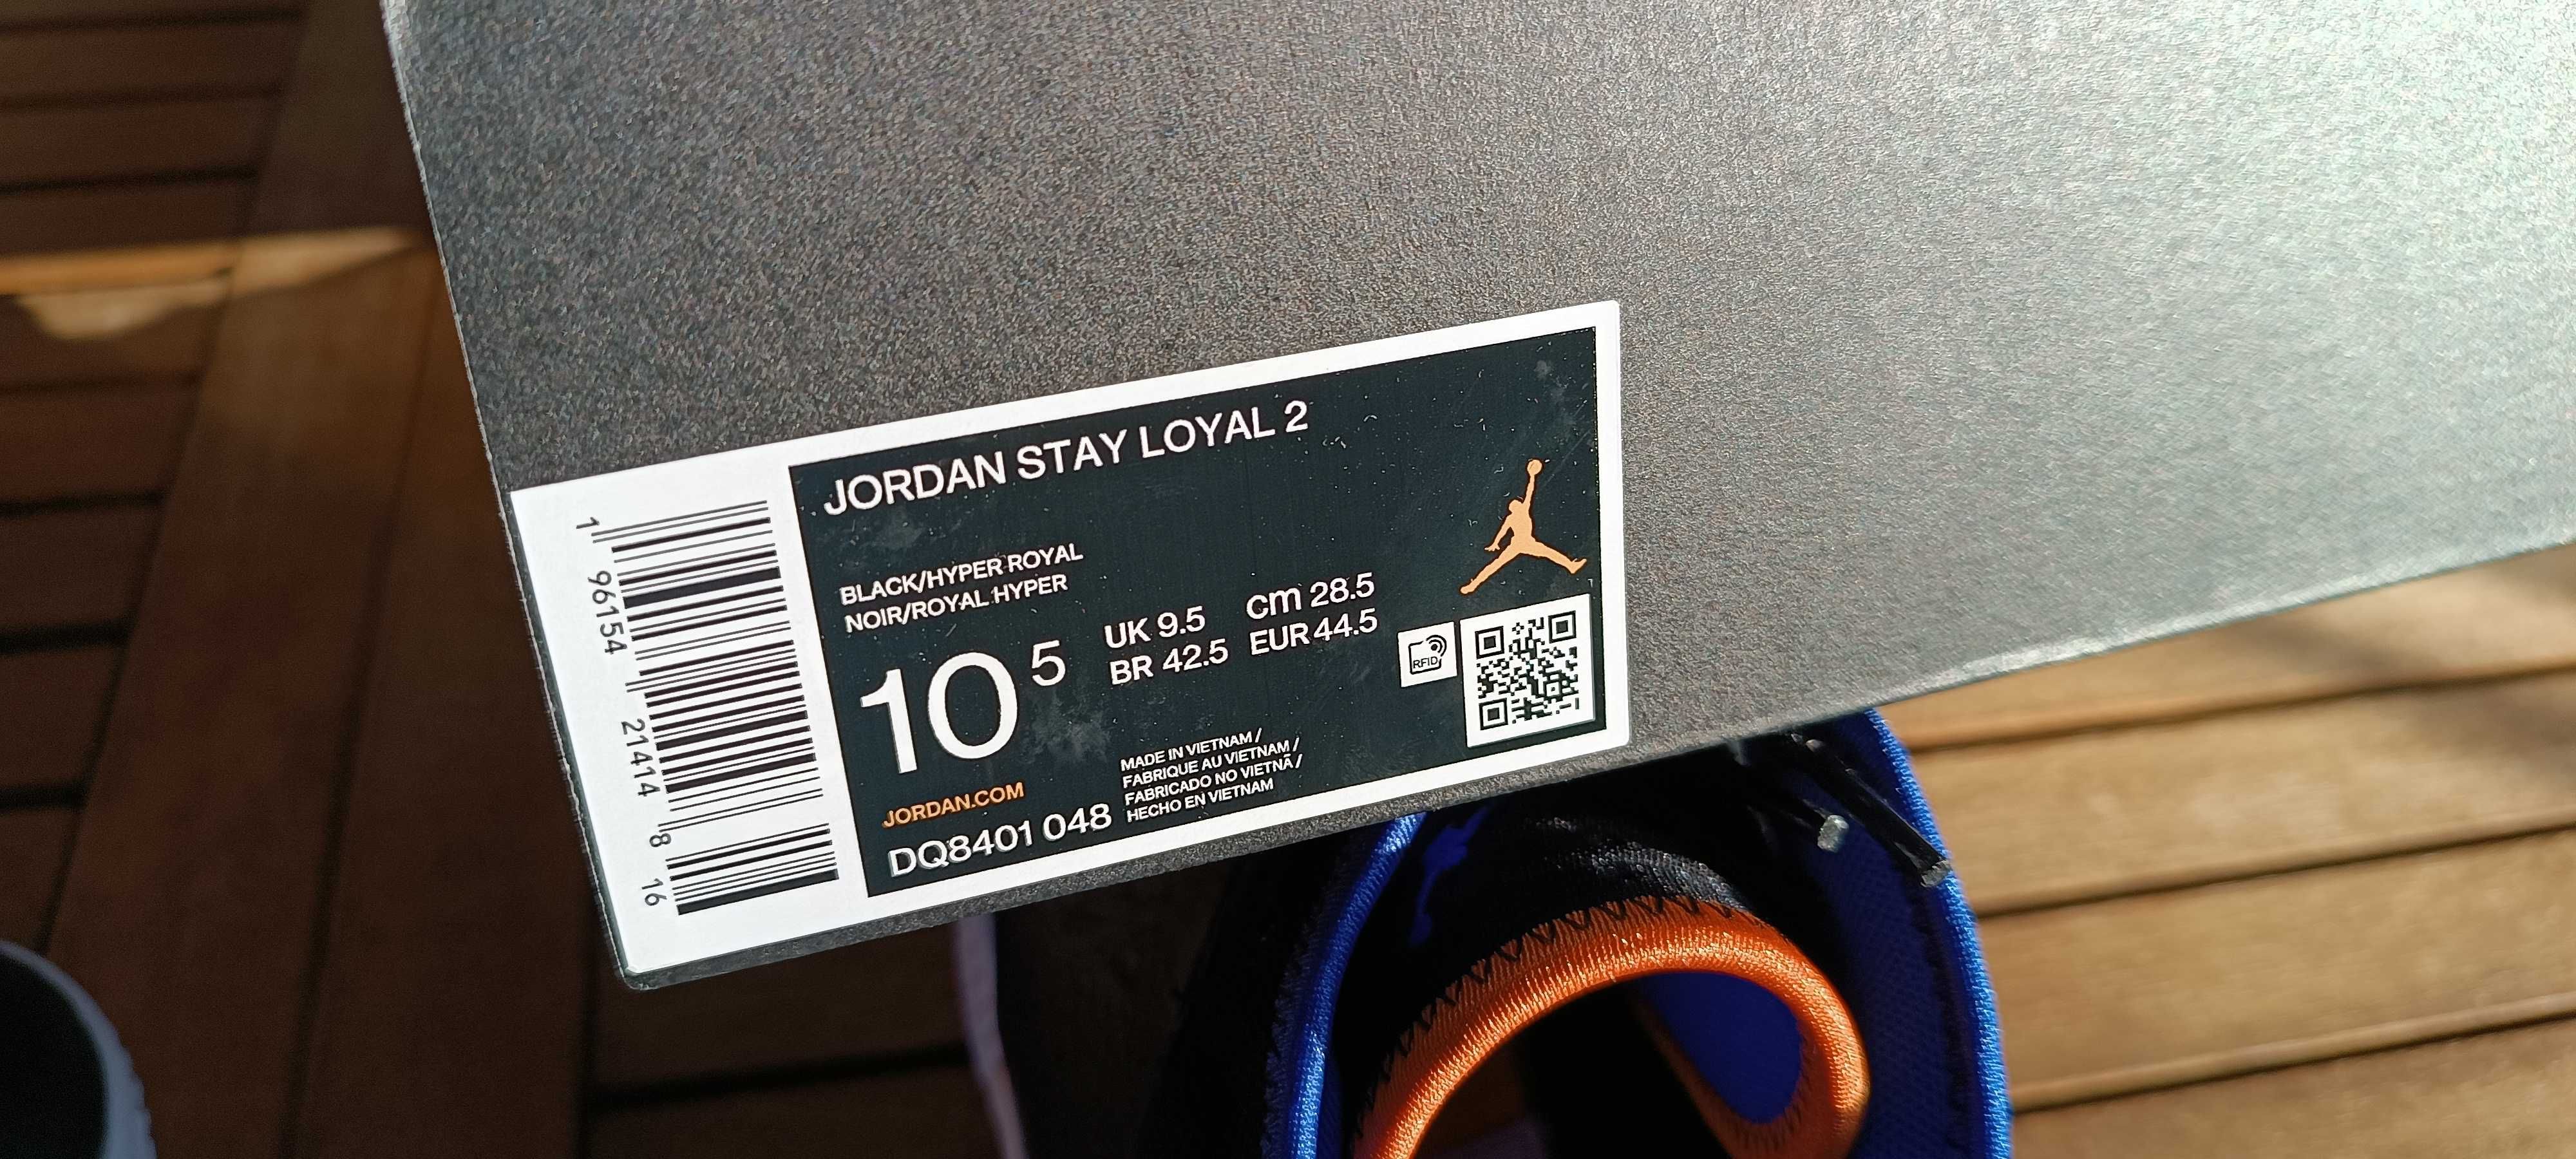 (r. Eur 44,5) Nike Jordan Stay Loyal 2 Black Hyper Royal DQ8401,-048